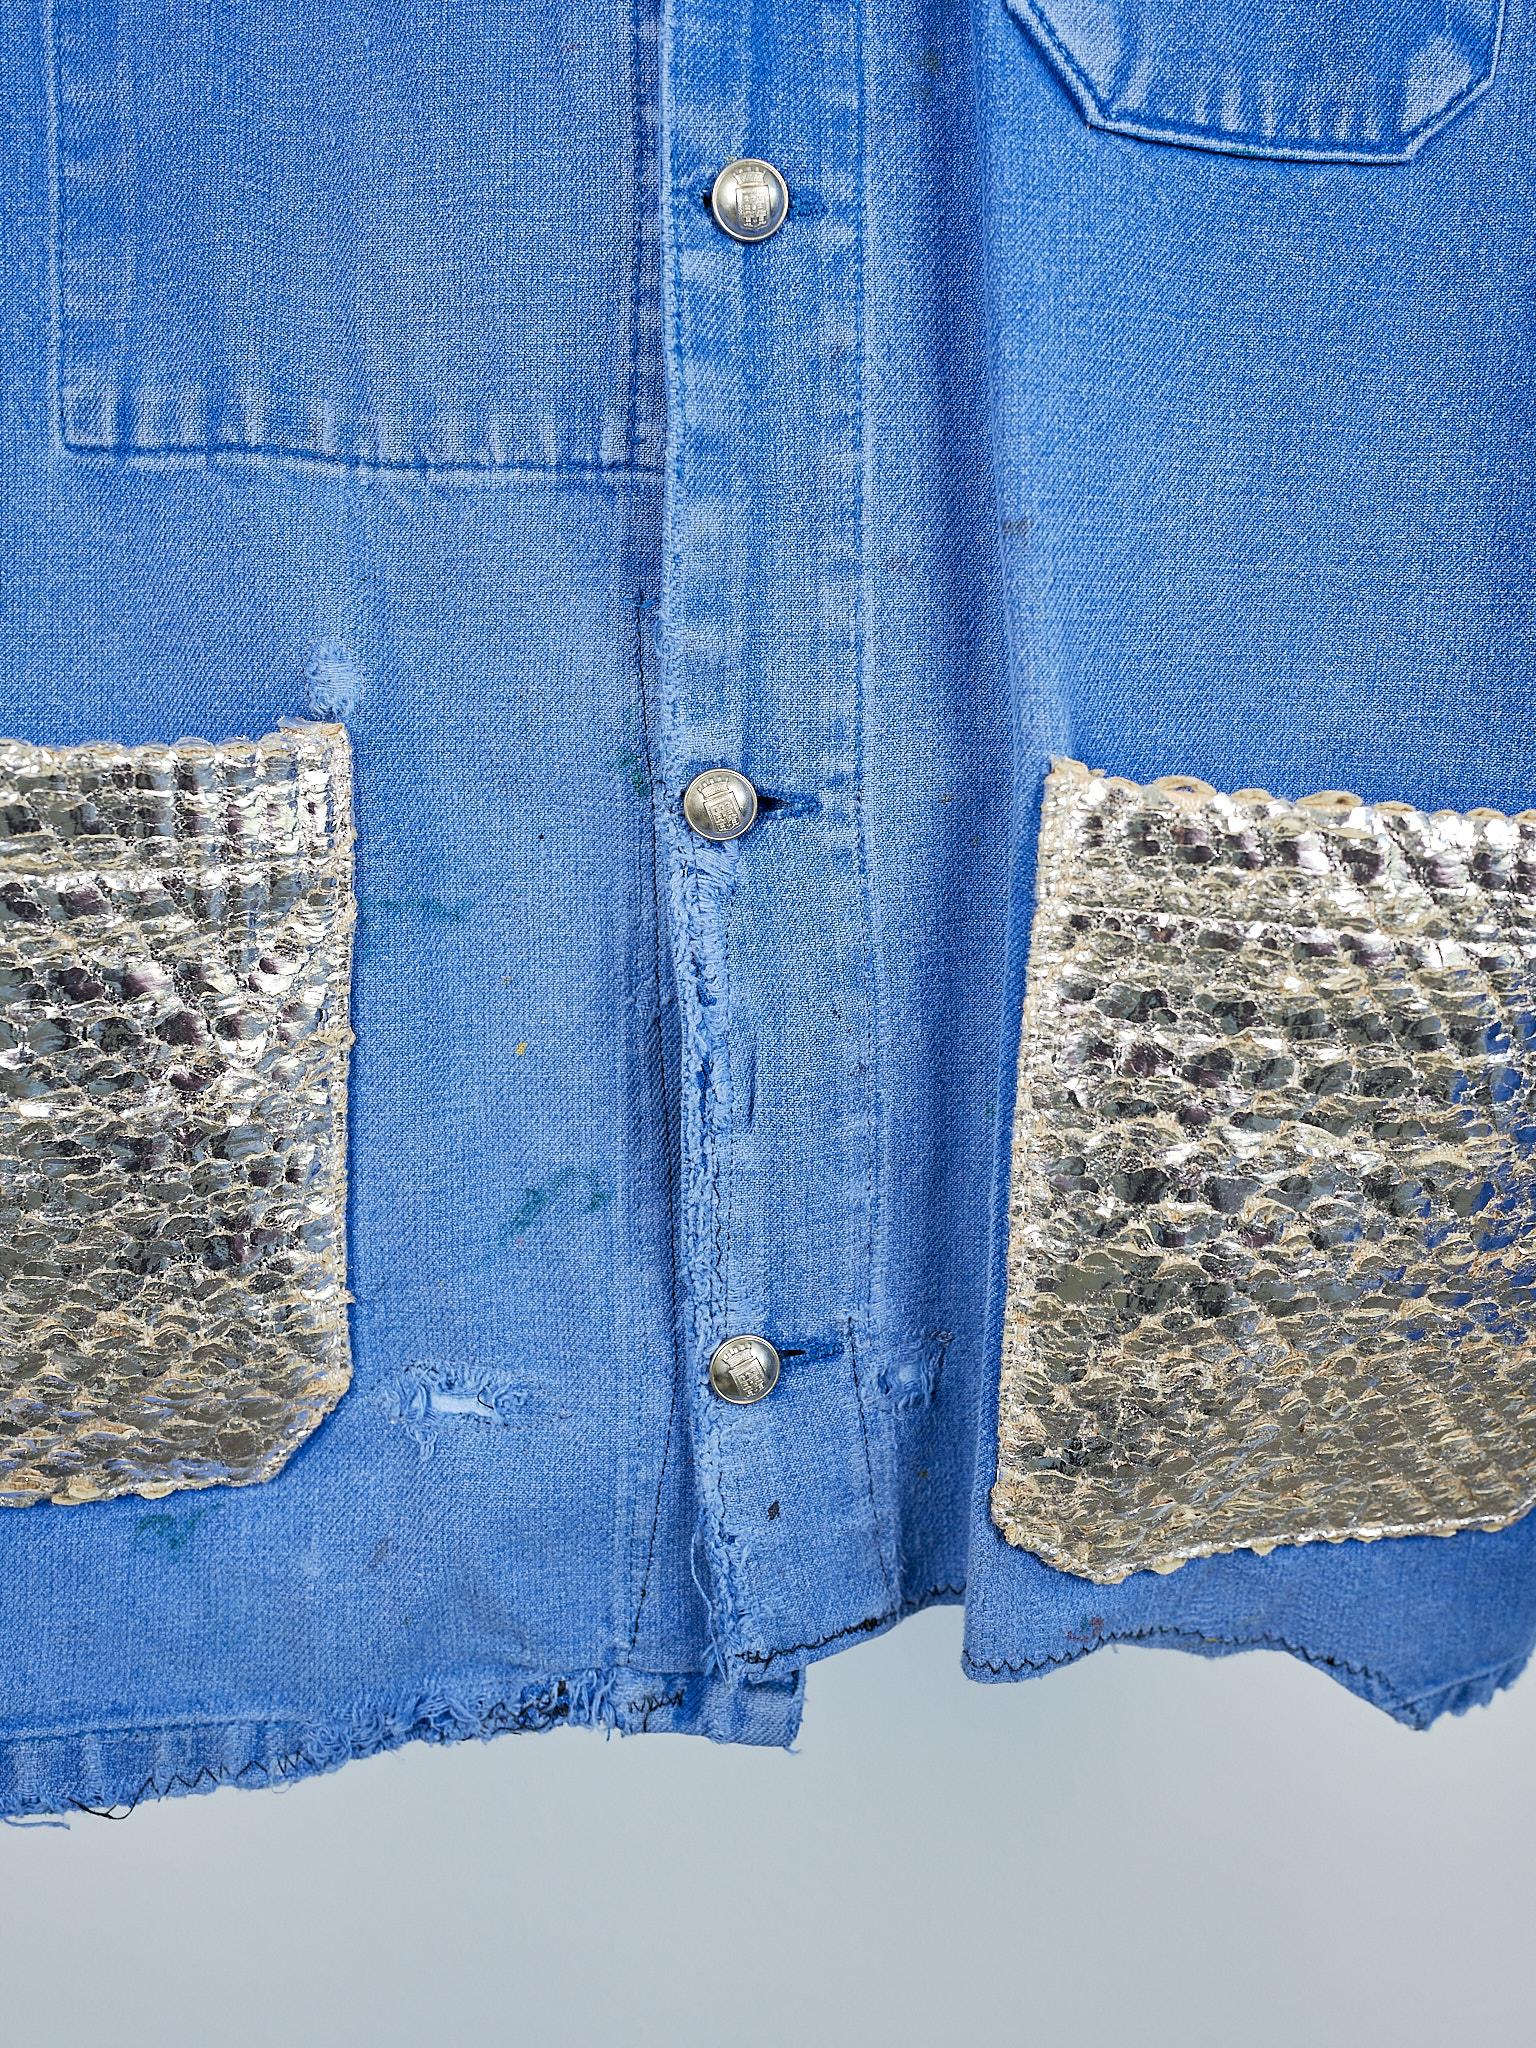 Collectible Vintage Blue Cobalt Distressed Jacket  French Work Wear Silver Tweed 2